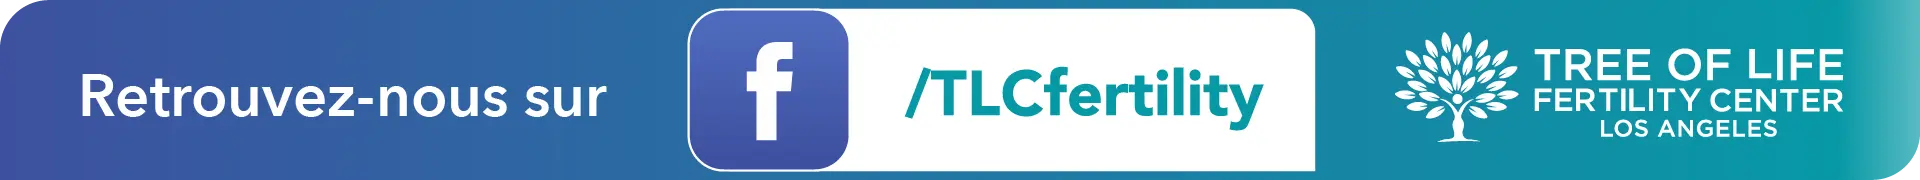 TLC facebook banner